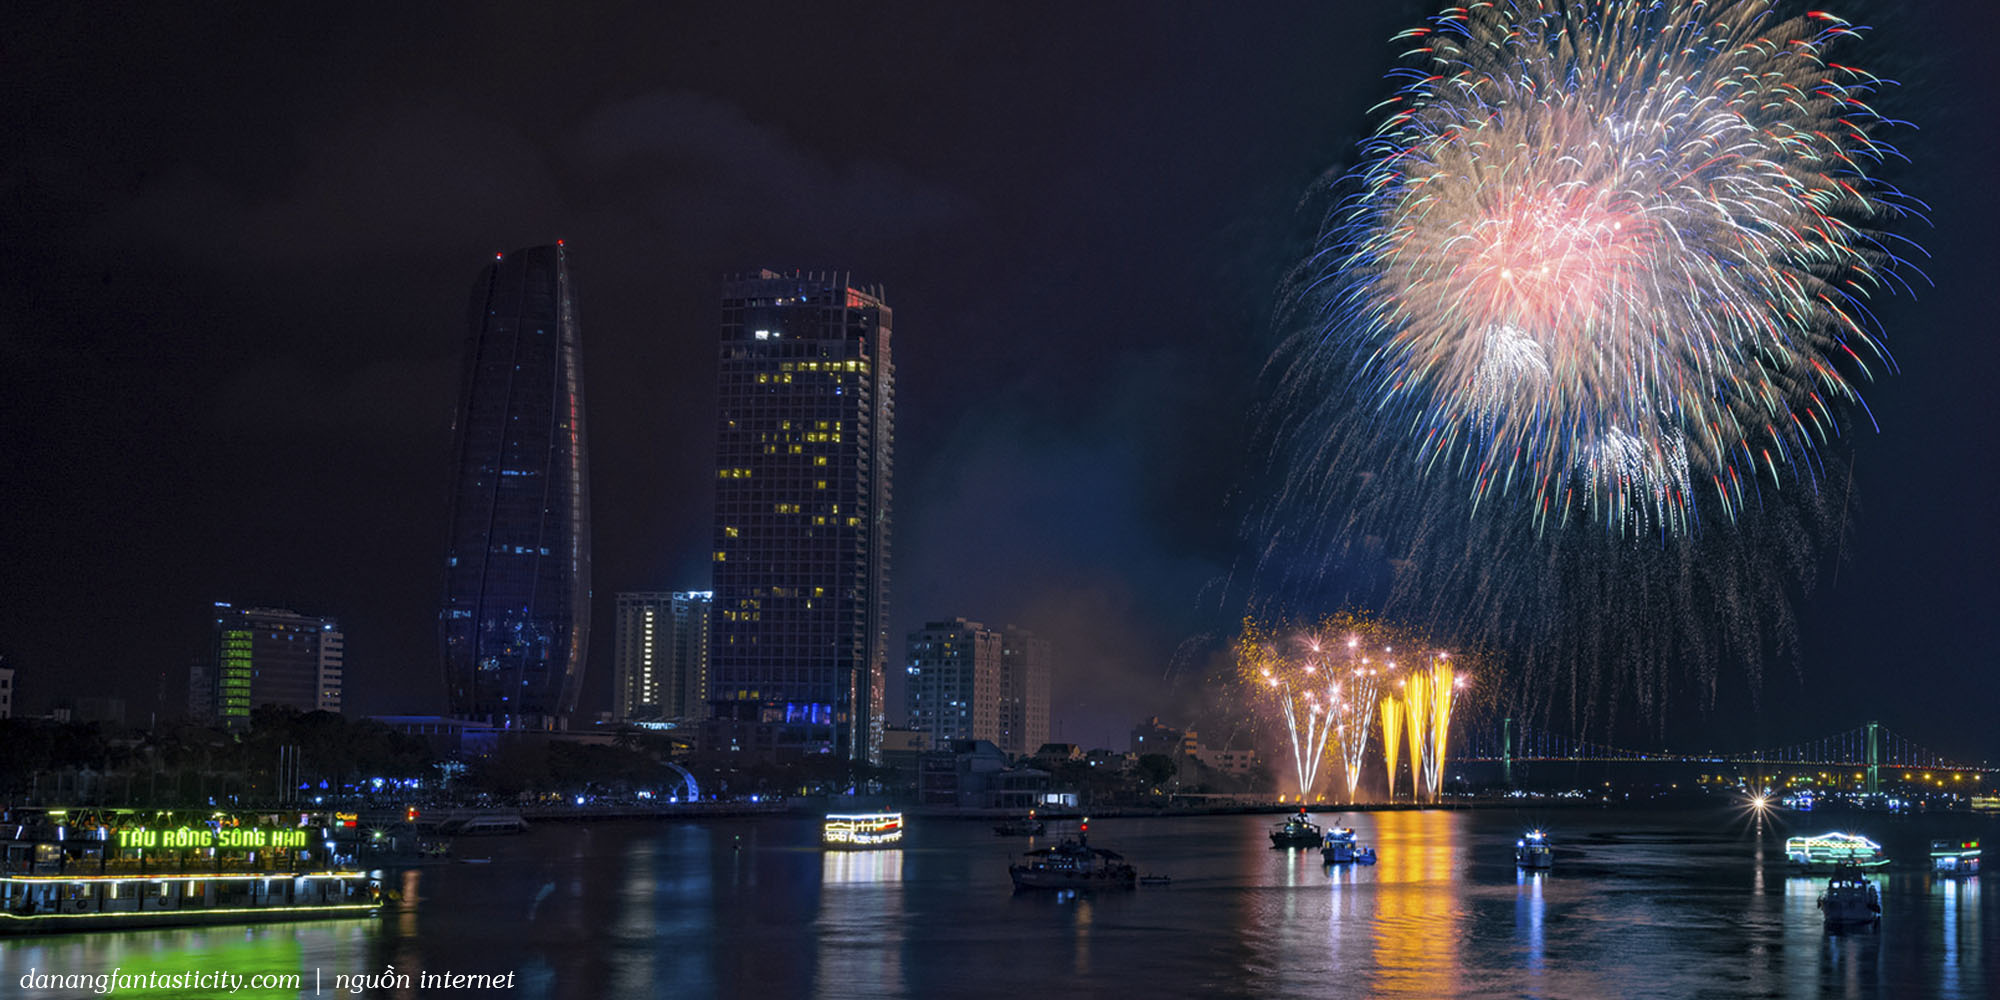 Han River Dragon Cruise Enjoy Danang International Fireworks Festival From The Best Viewing Spots In Danang 02